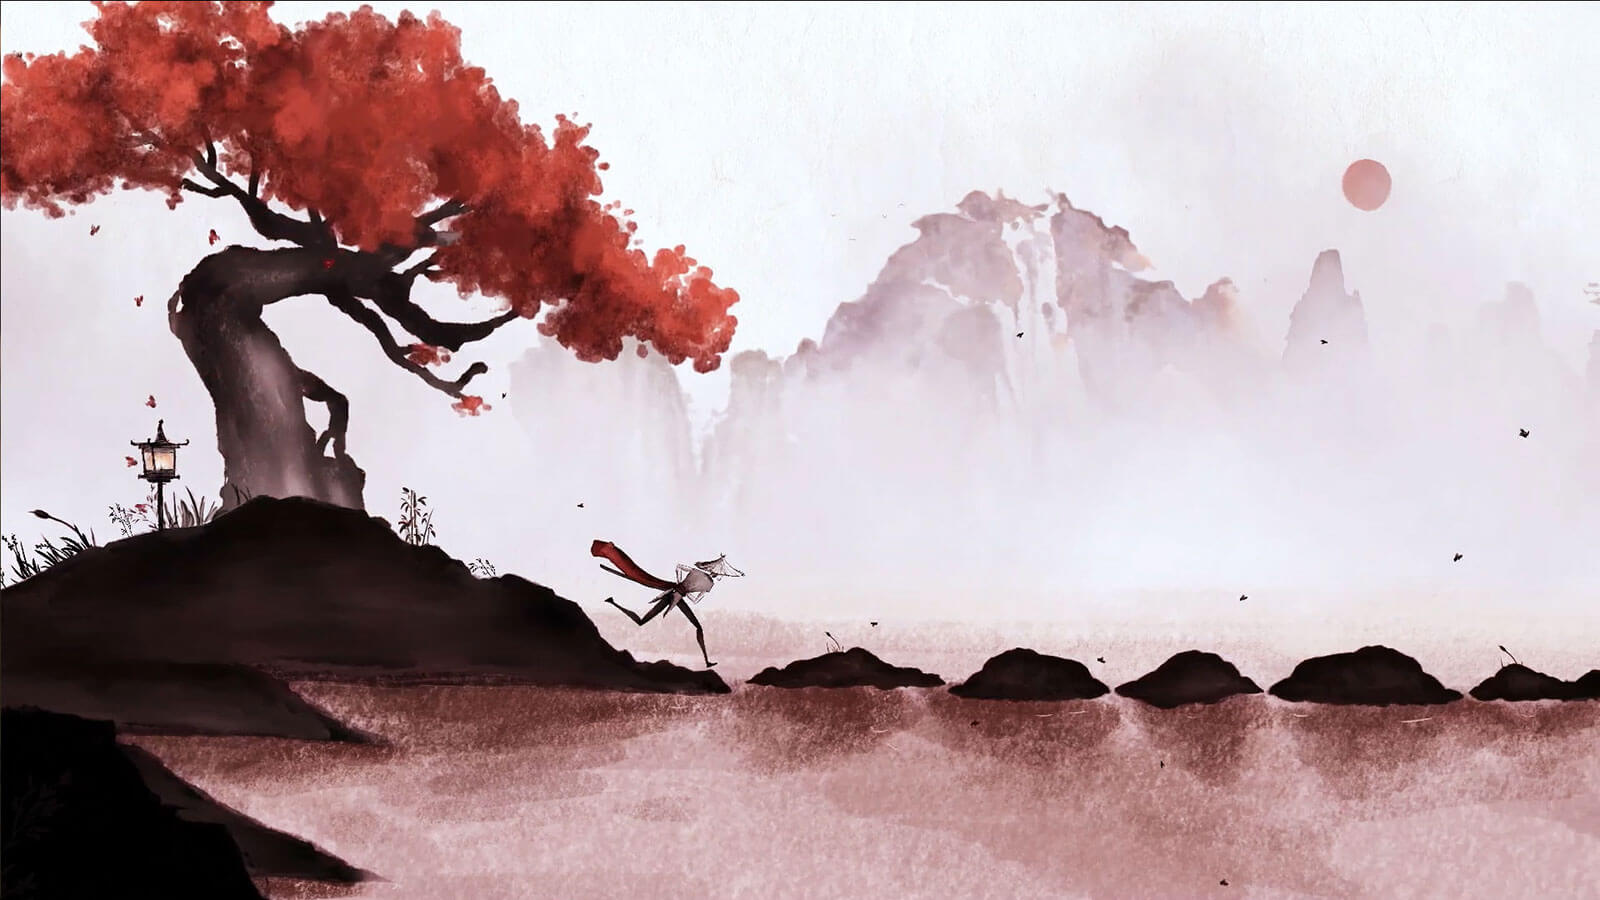 A samurai runs across staggered rocks on a lake